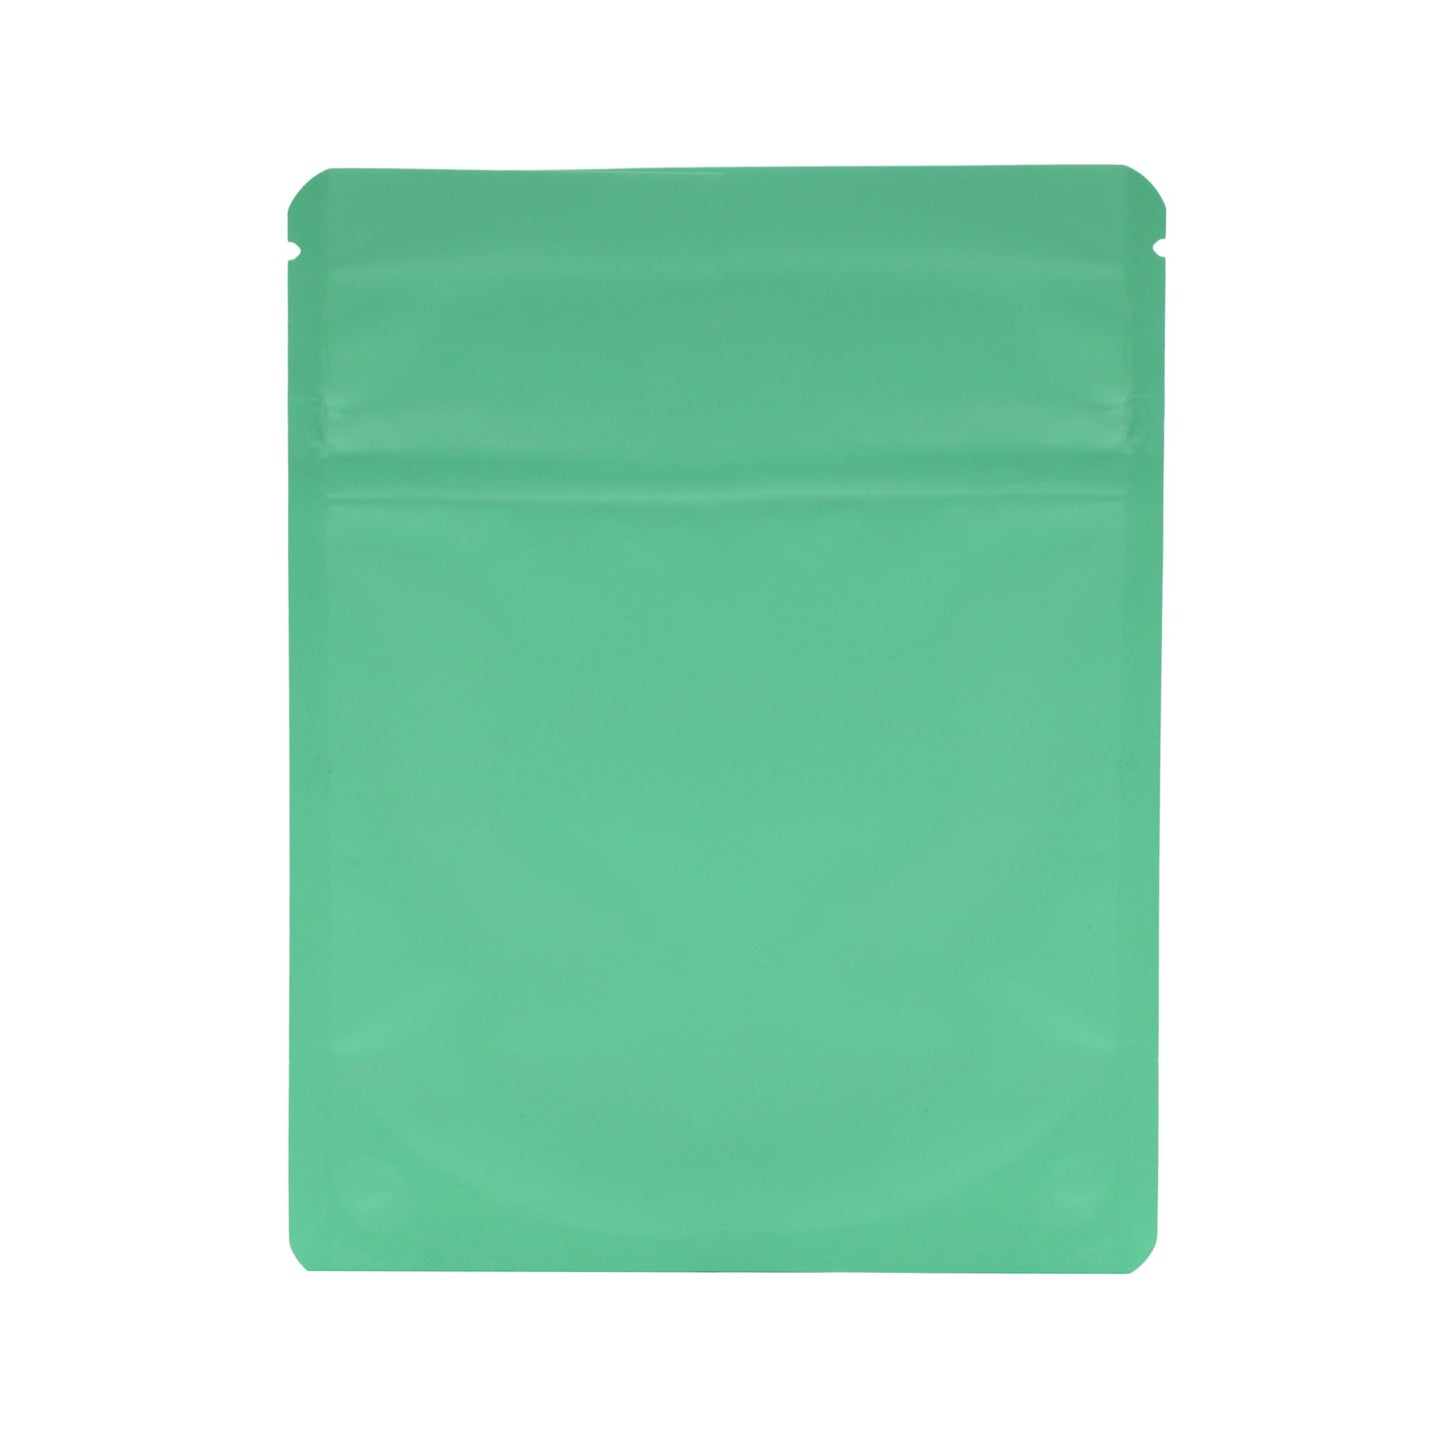 Bag King Child-Resistant Opaque Bag (1 gram) 3.5” x 4.5” Matte Seafoam